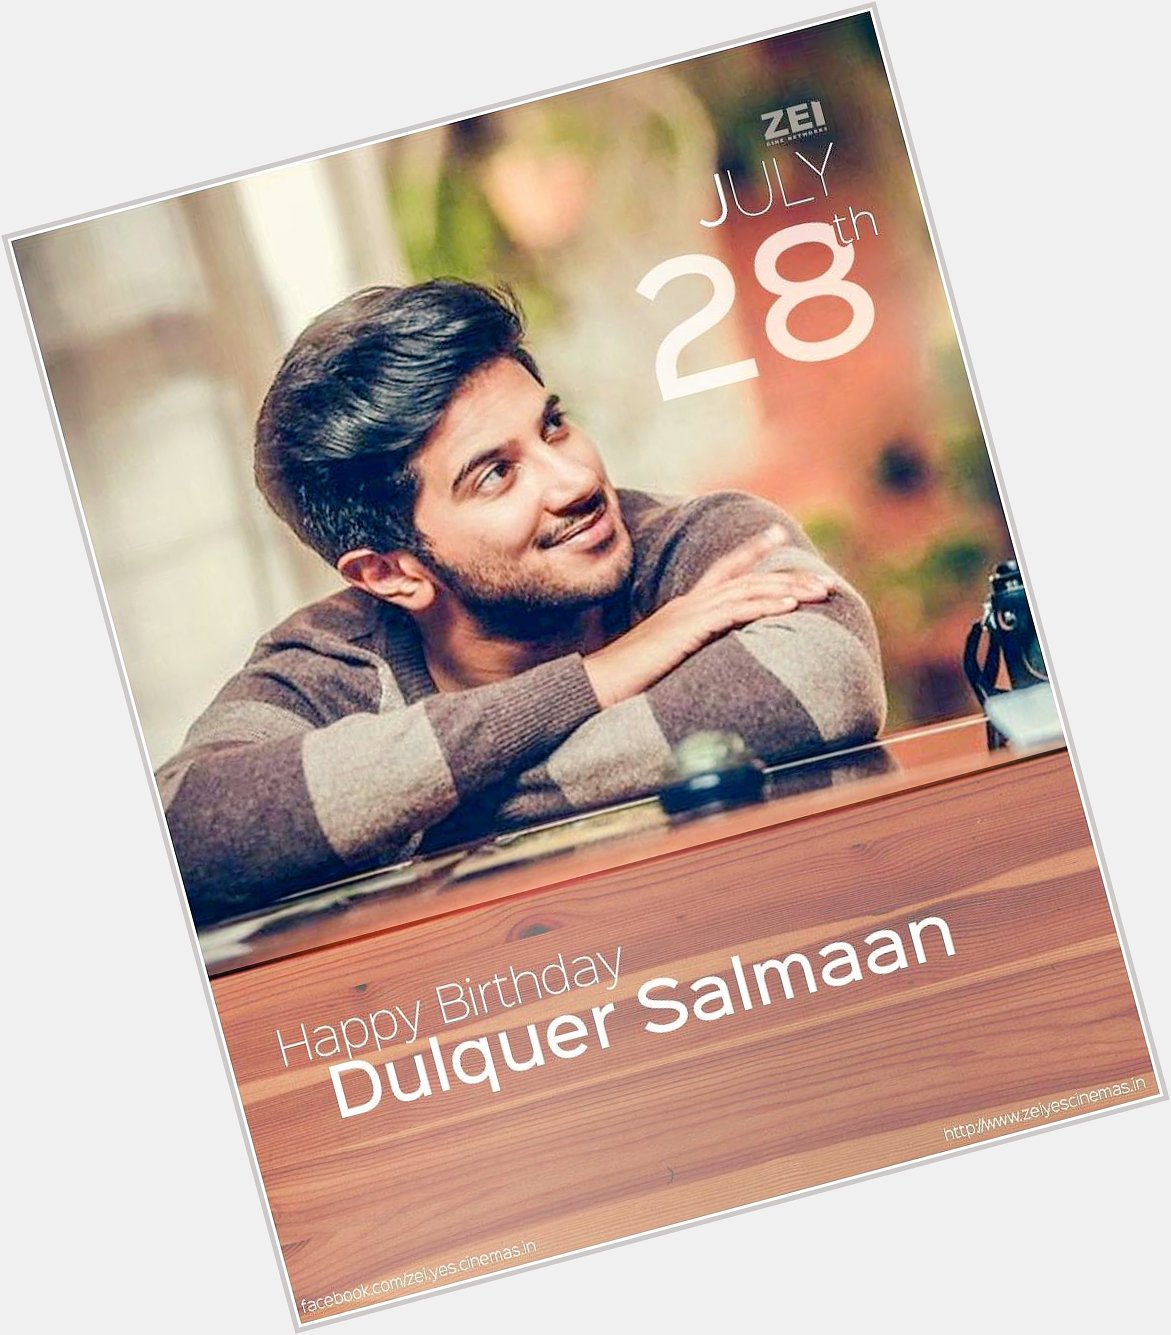 Happy Birthday Dulquer Salmaan  